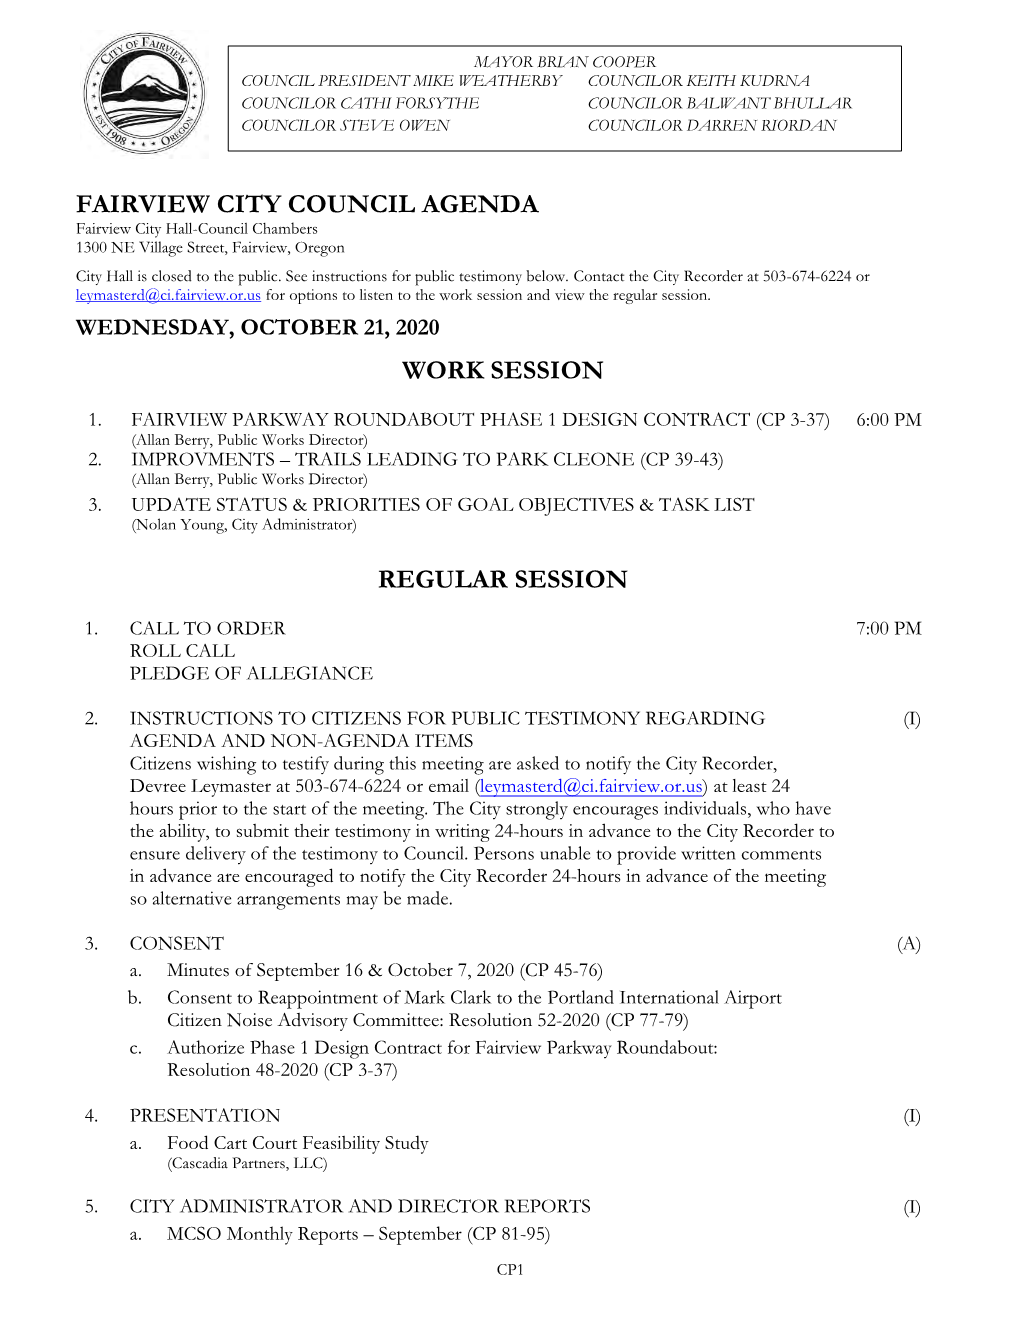 Fairview City Council Agenda Work Session Regular